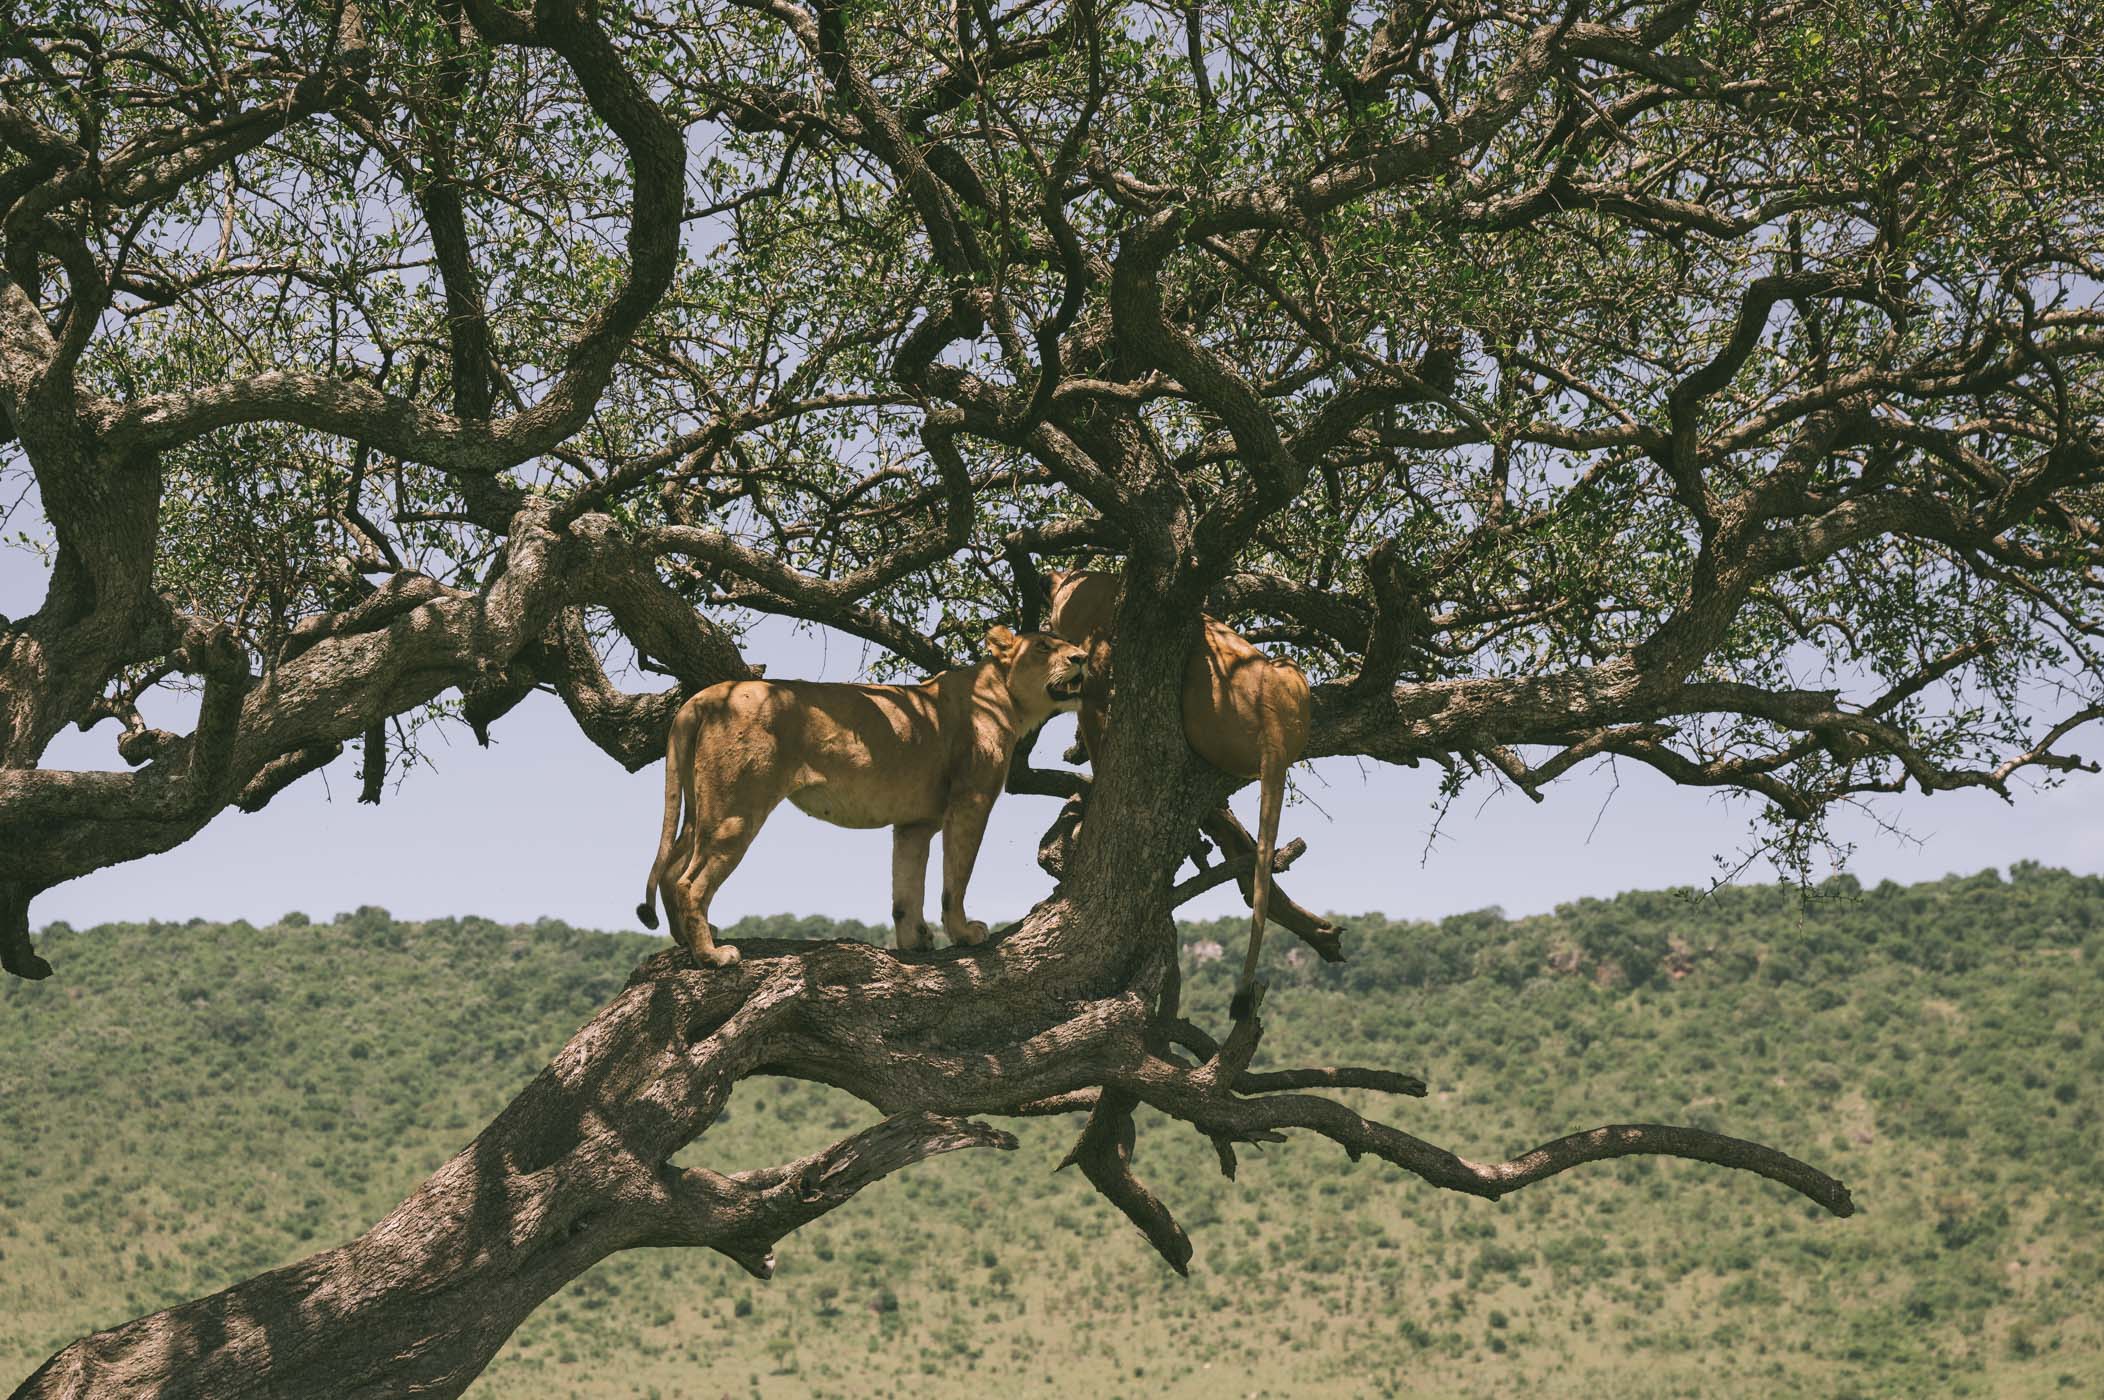 Tree-climbing lions in the Mara Triangle in Kenya